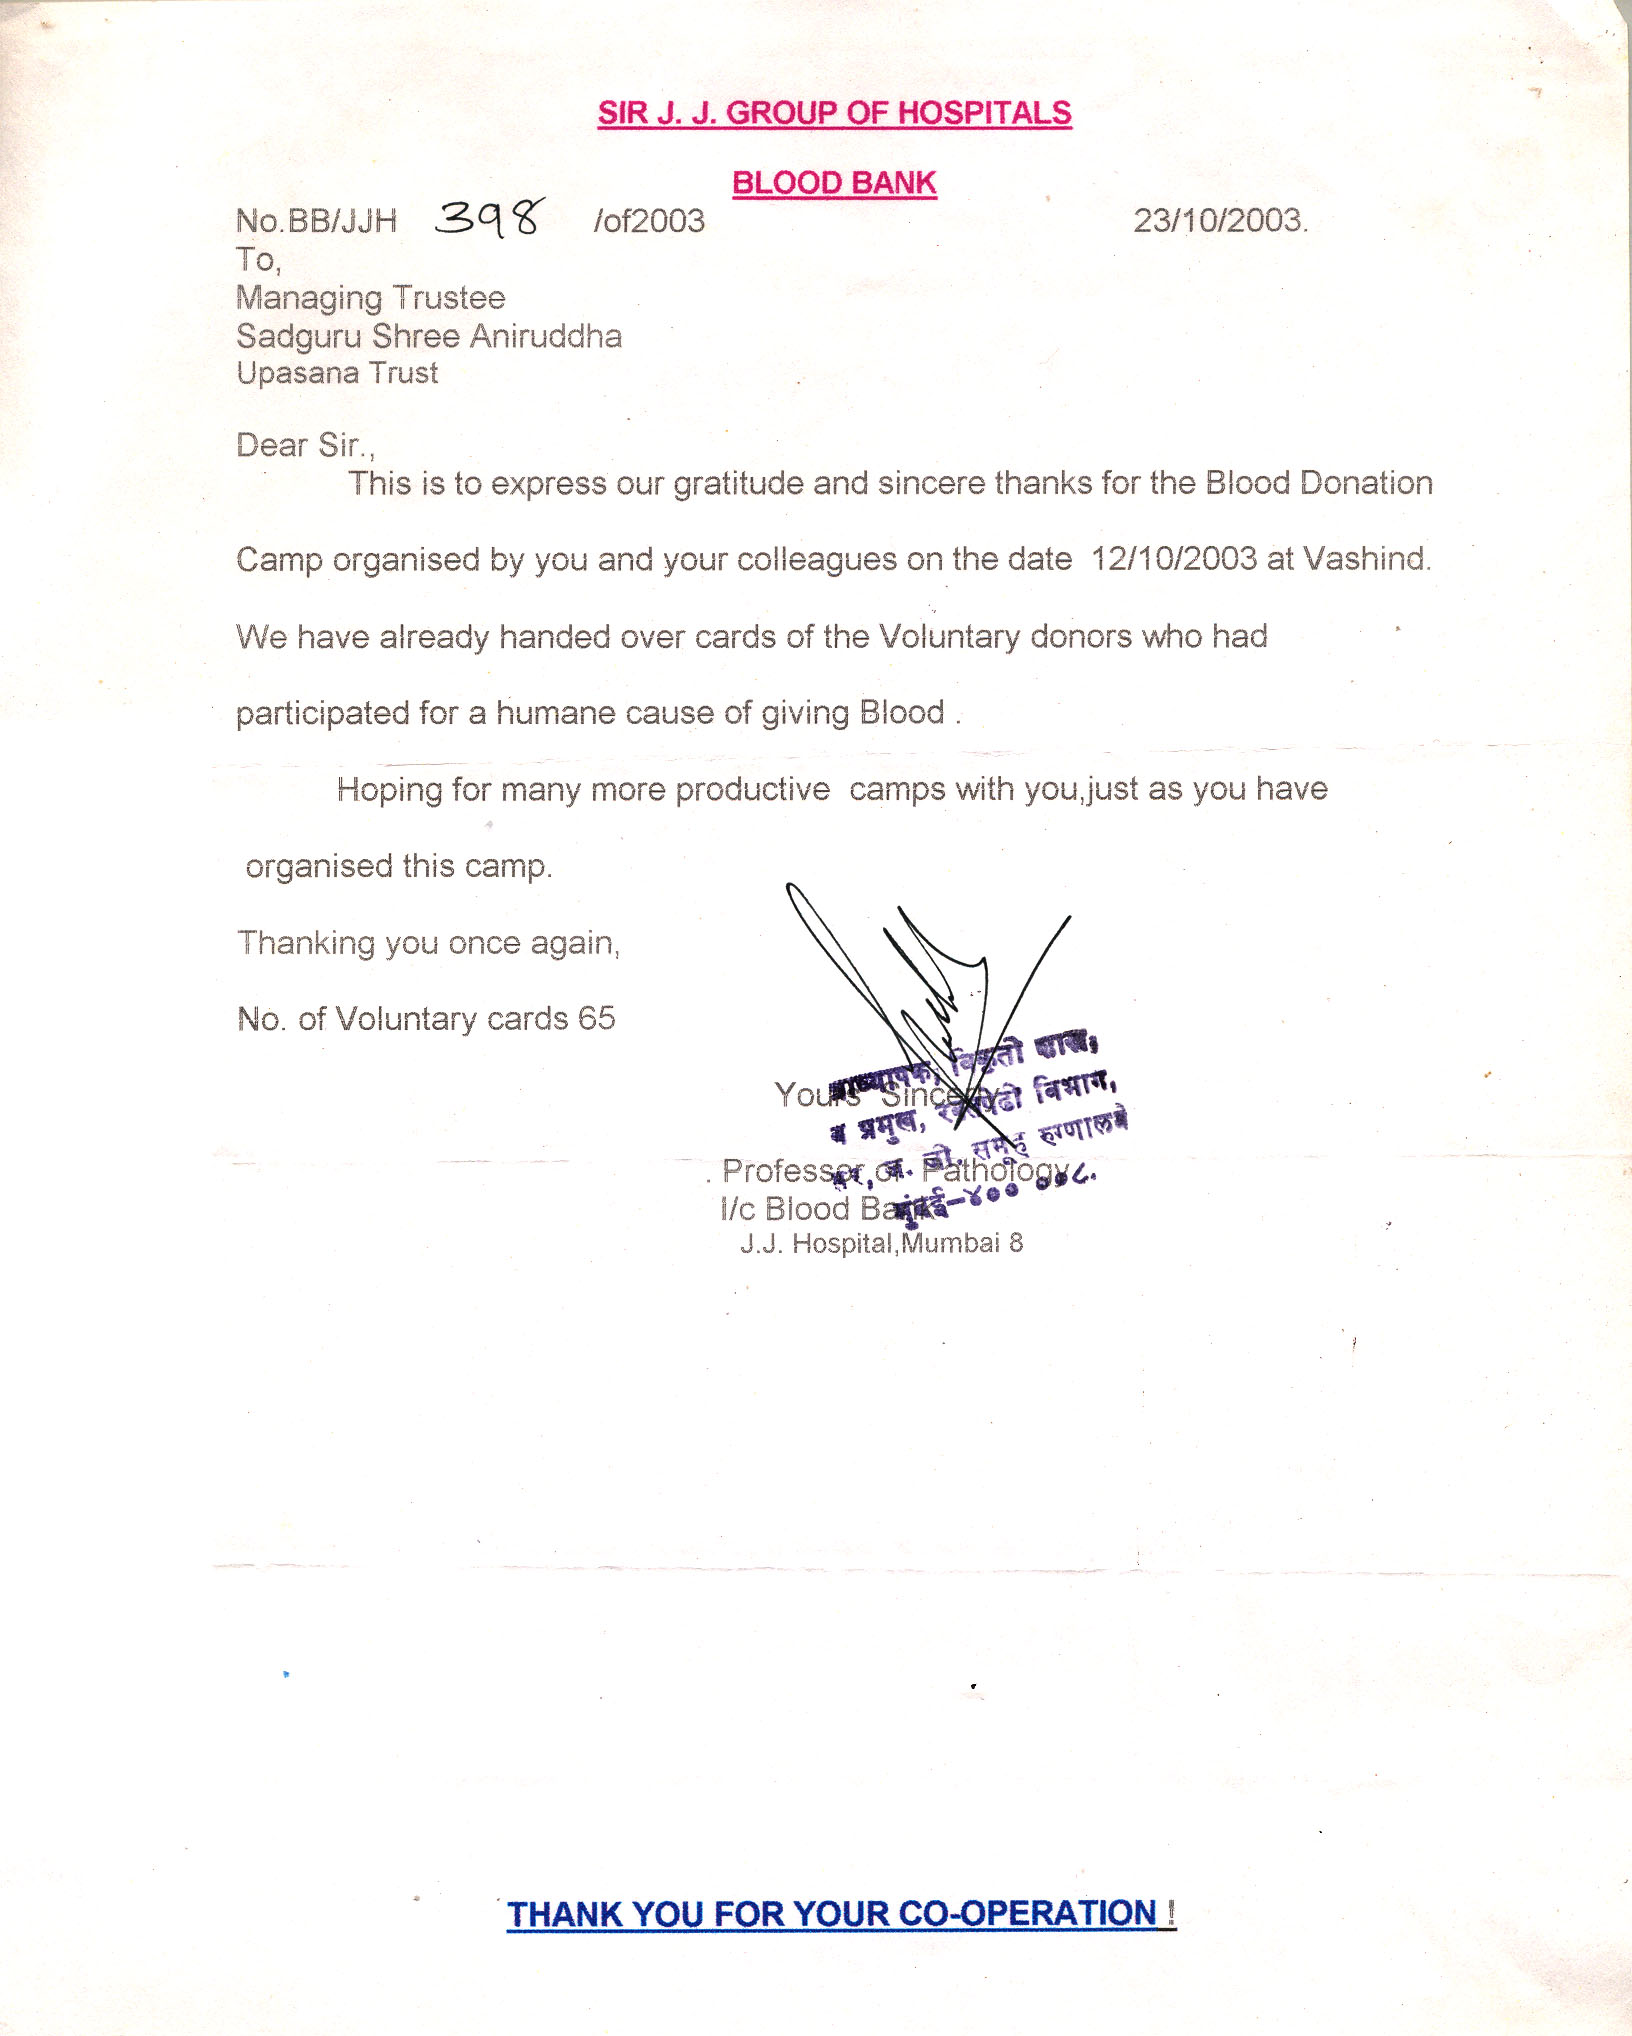 Appreciation-Letter from J J Hospital3 2003-for-Aniruddhafoundation-Compassion-Social-services